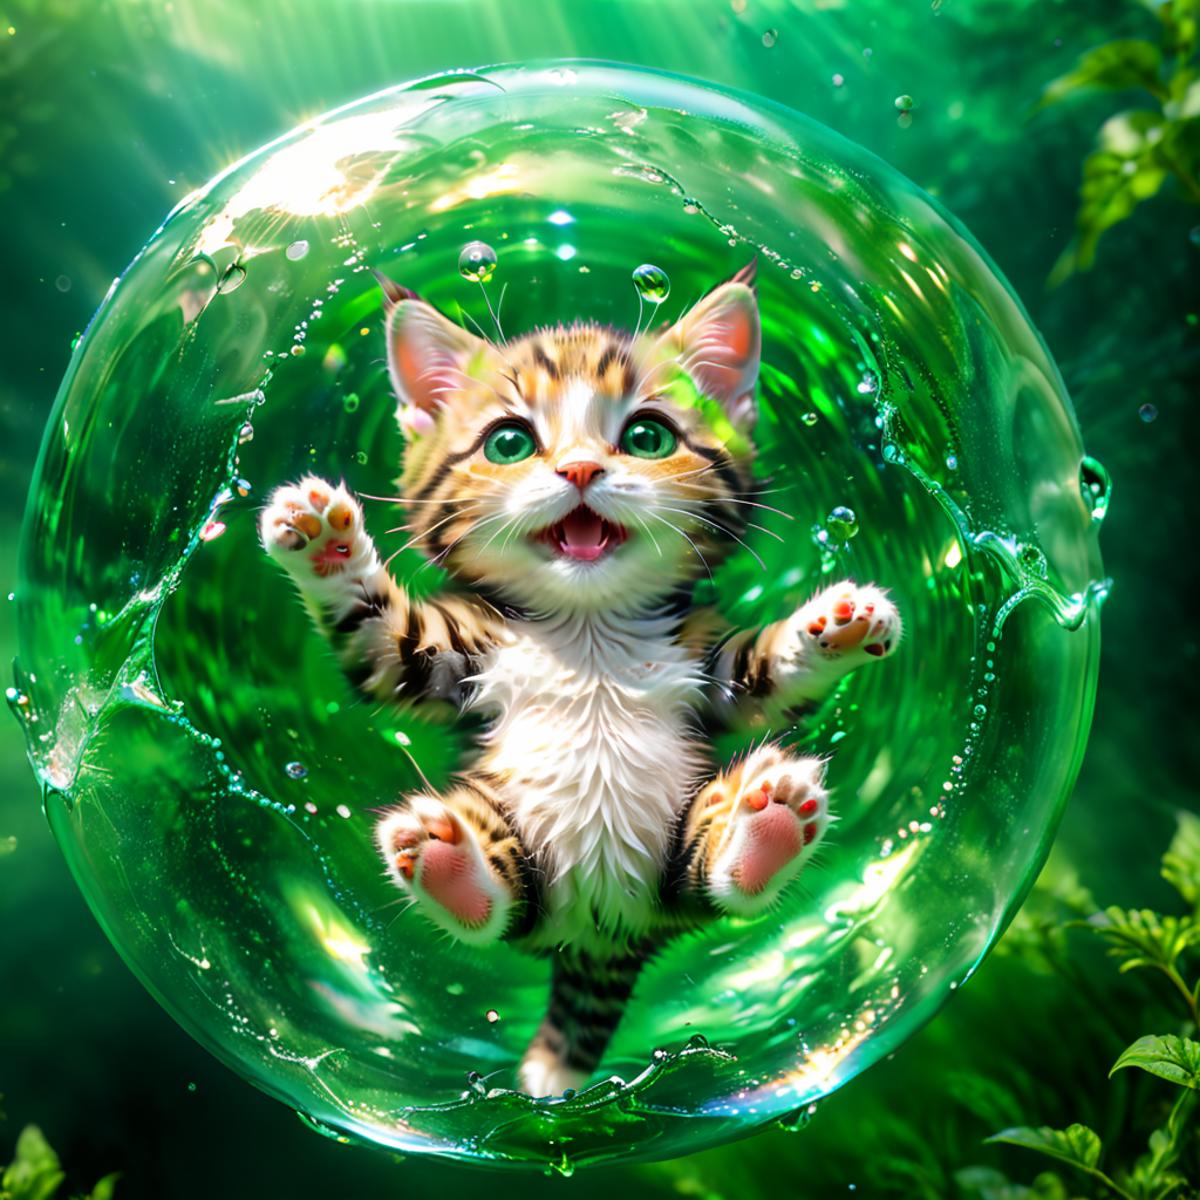 A Kitten Inside a Bubble: A Cute and Playful Scene